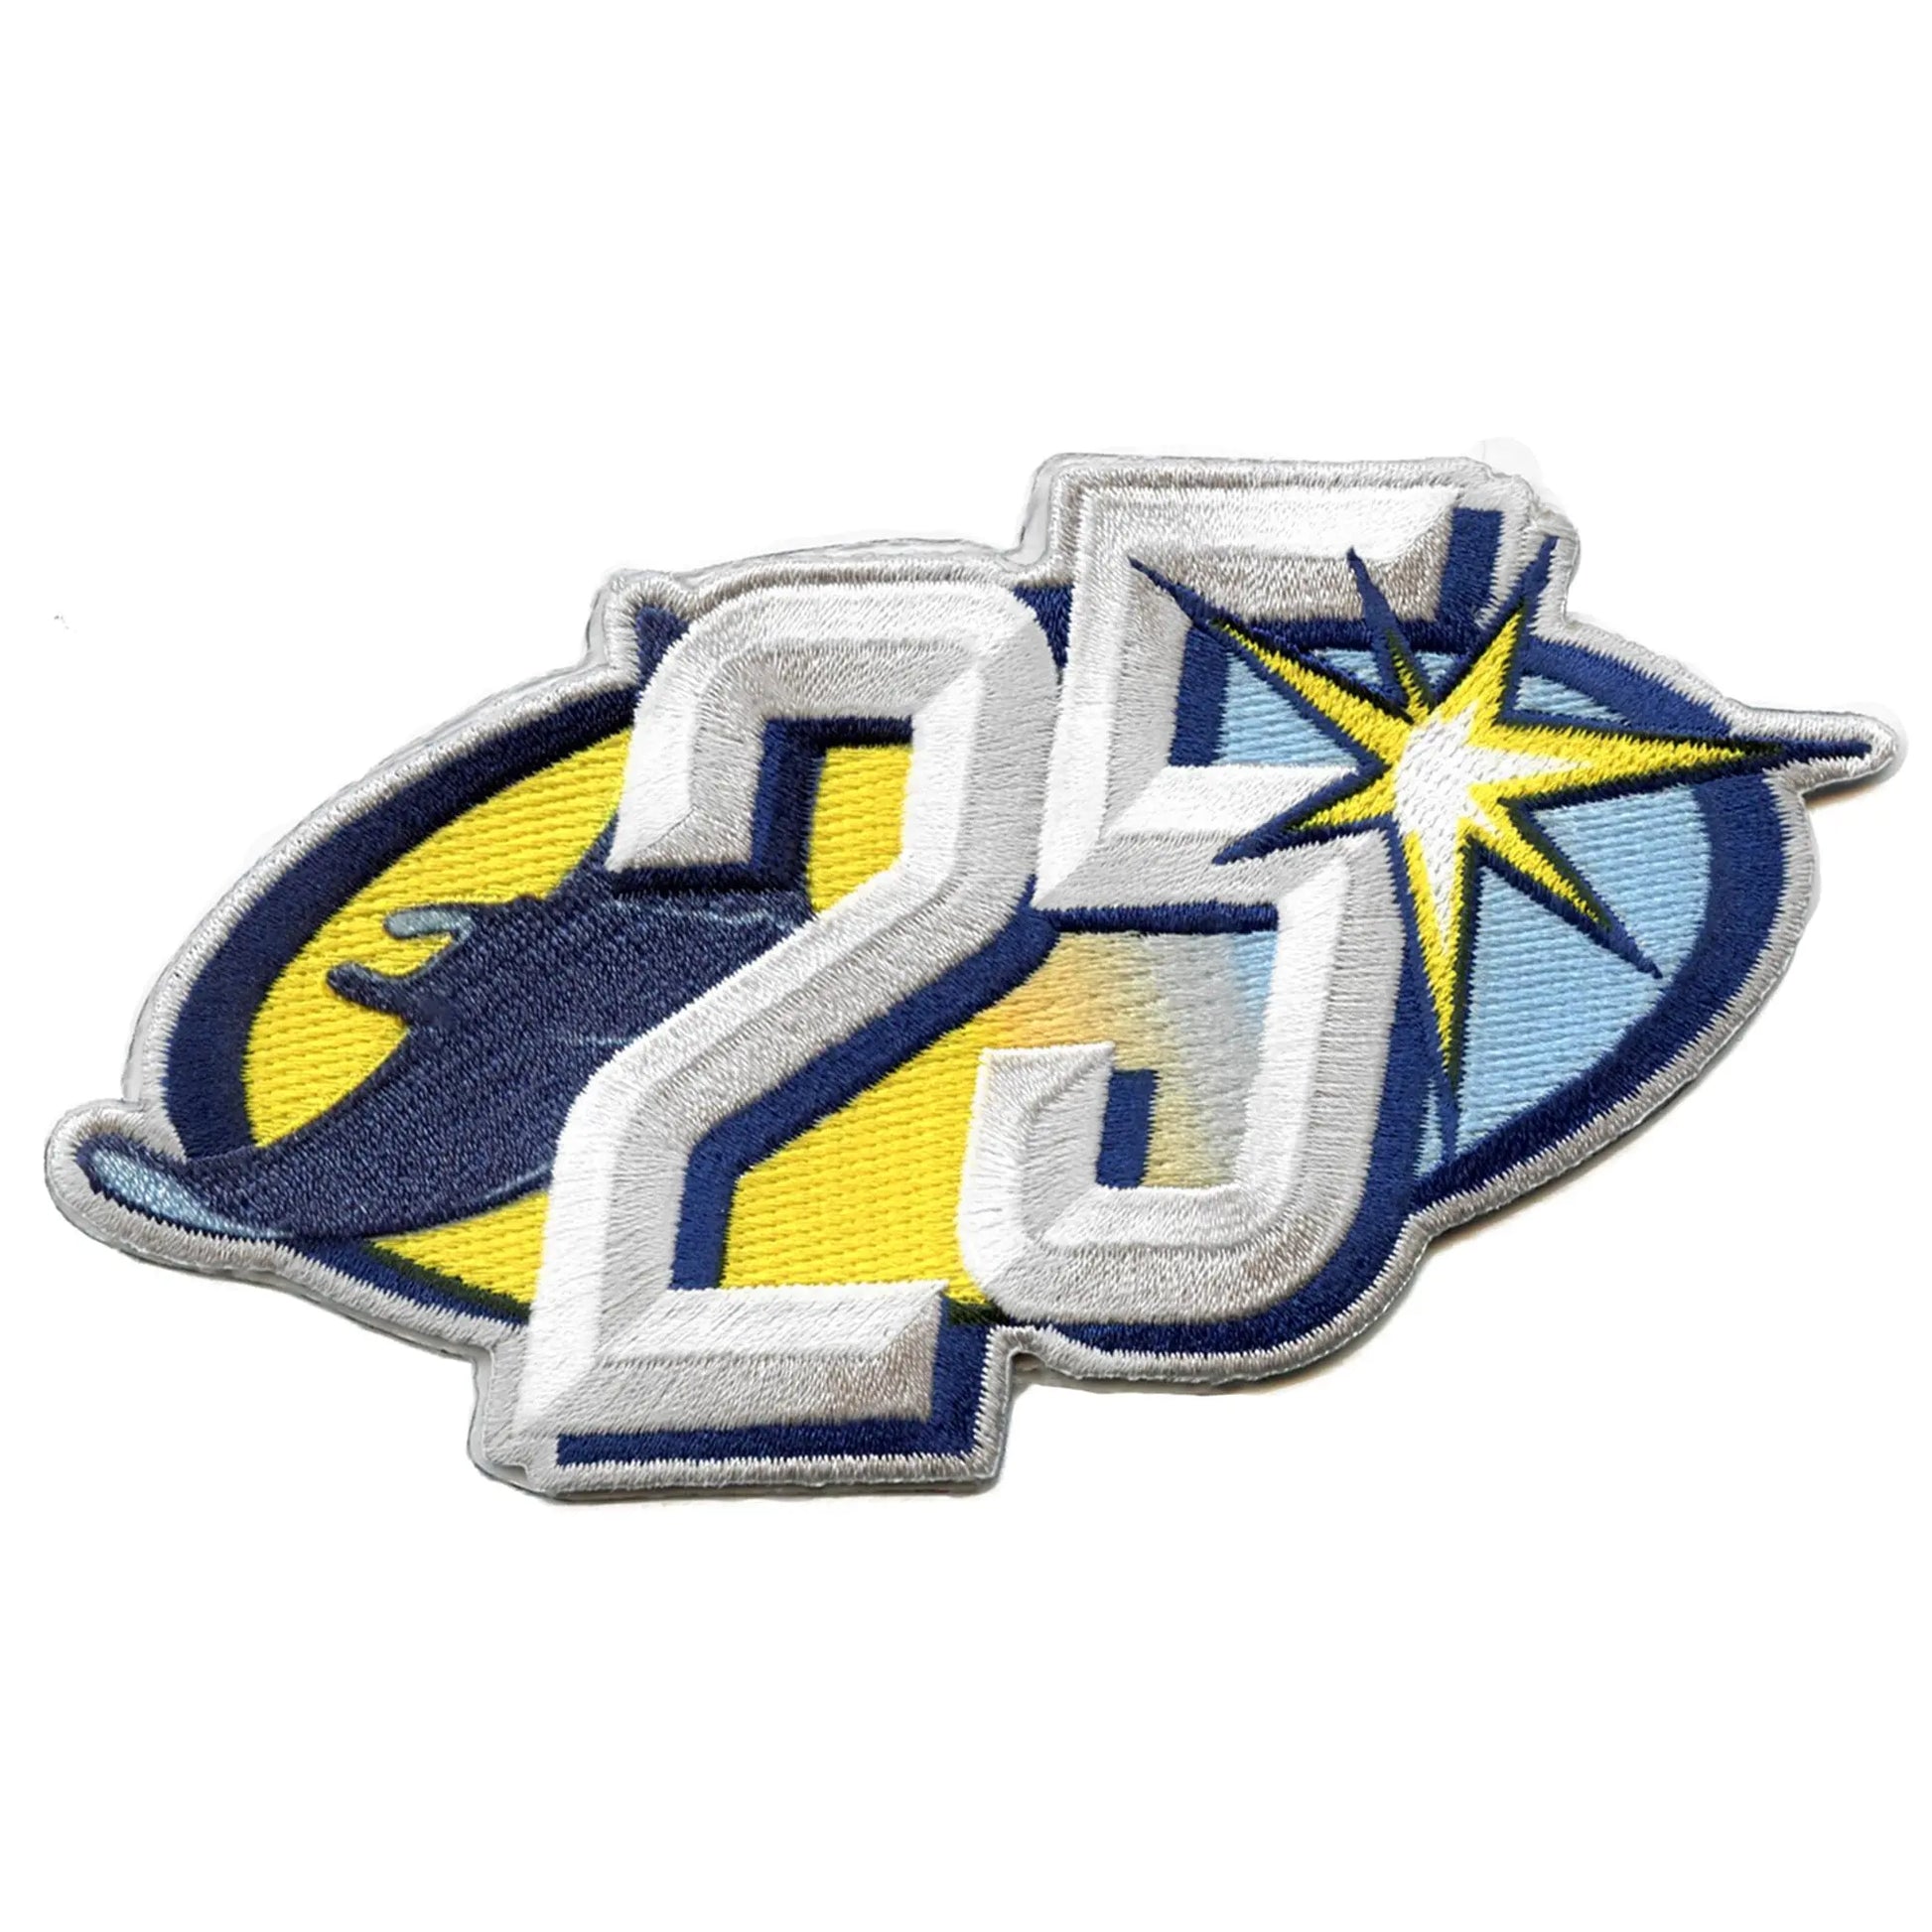 25 Golden State Warriors All Jerseys and Logos ideas